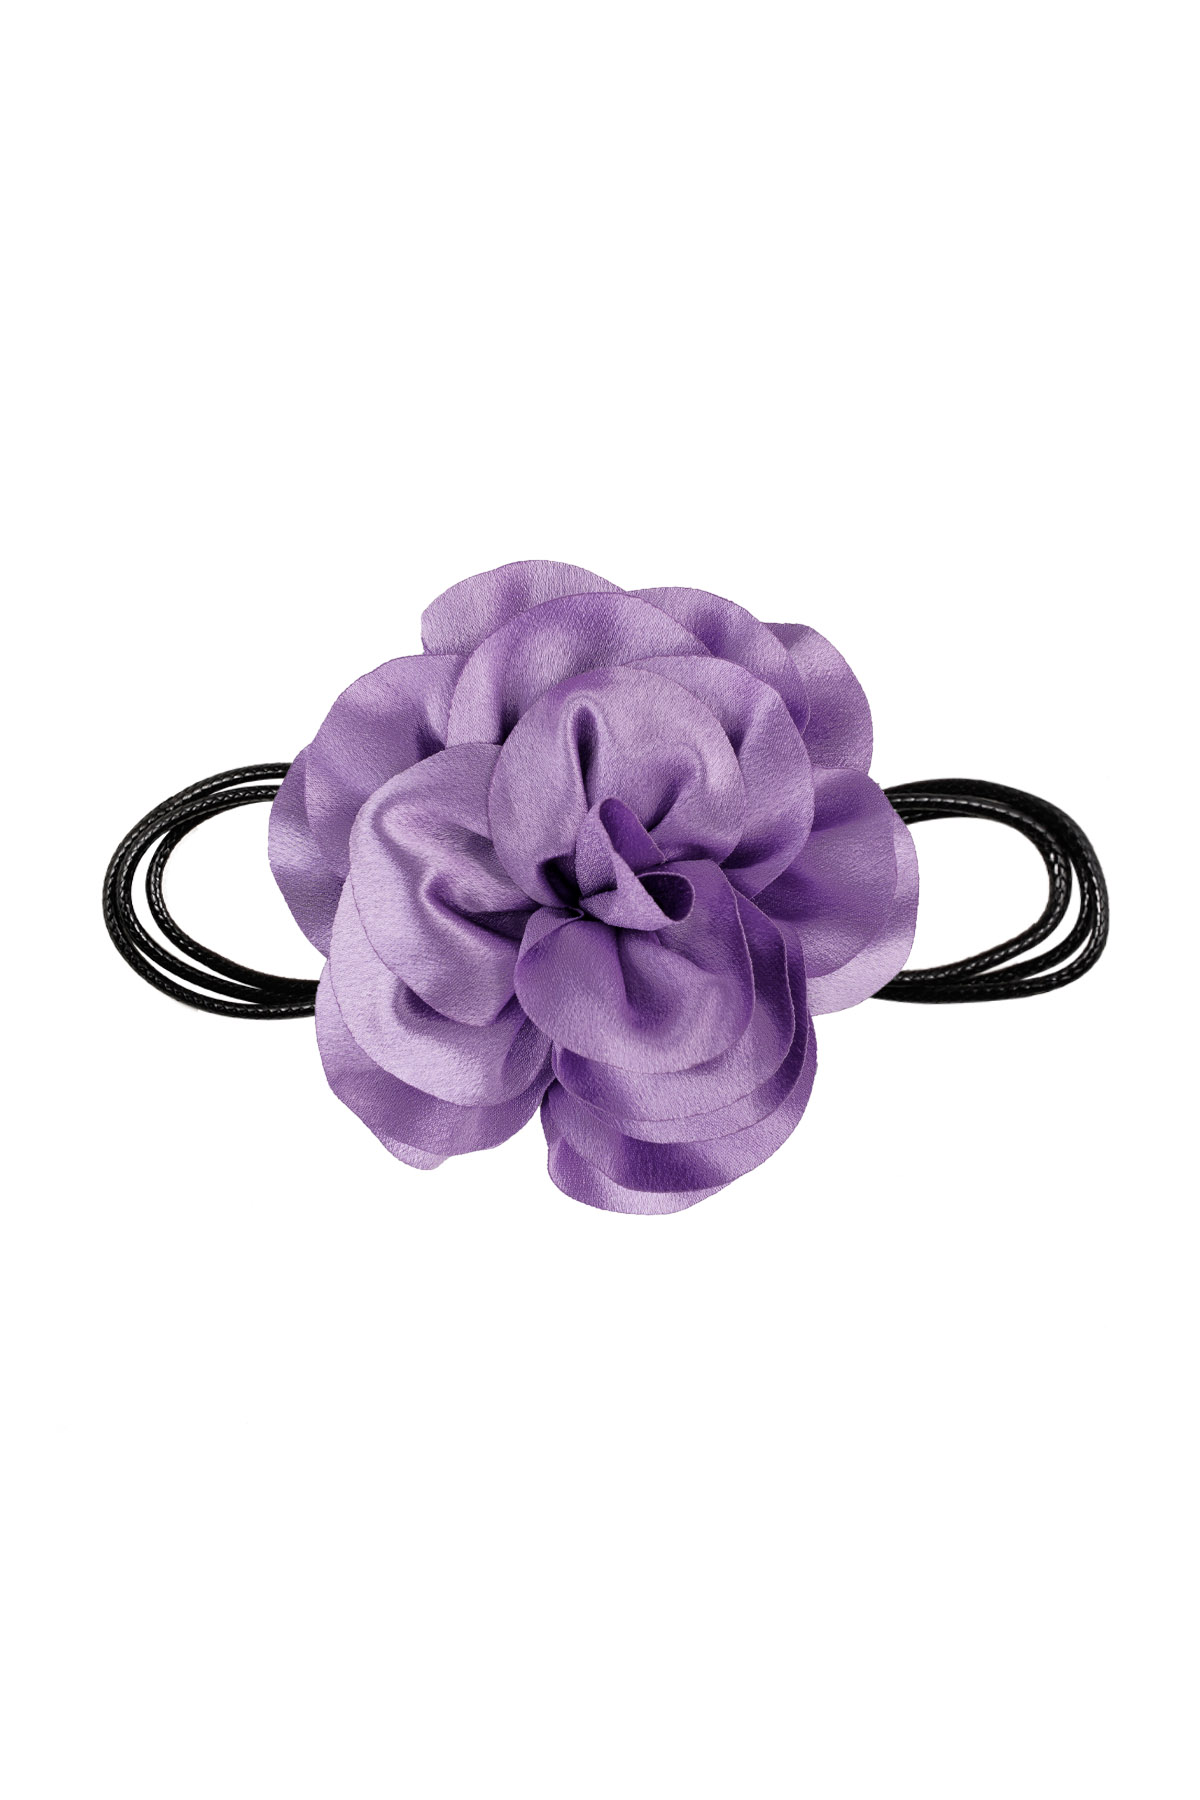 Halskette Seil glänzende Blume - lila h5 